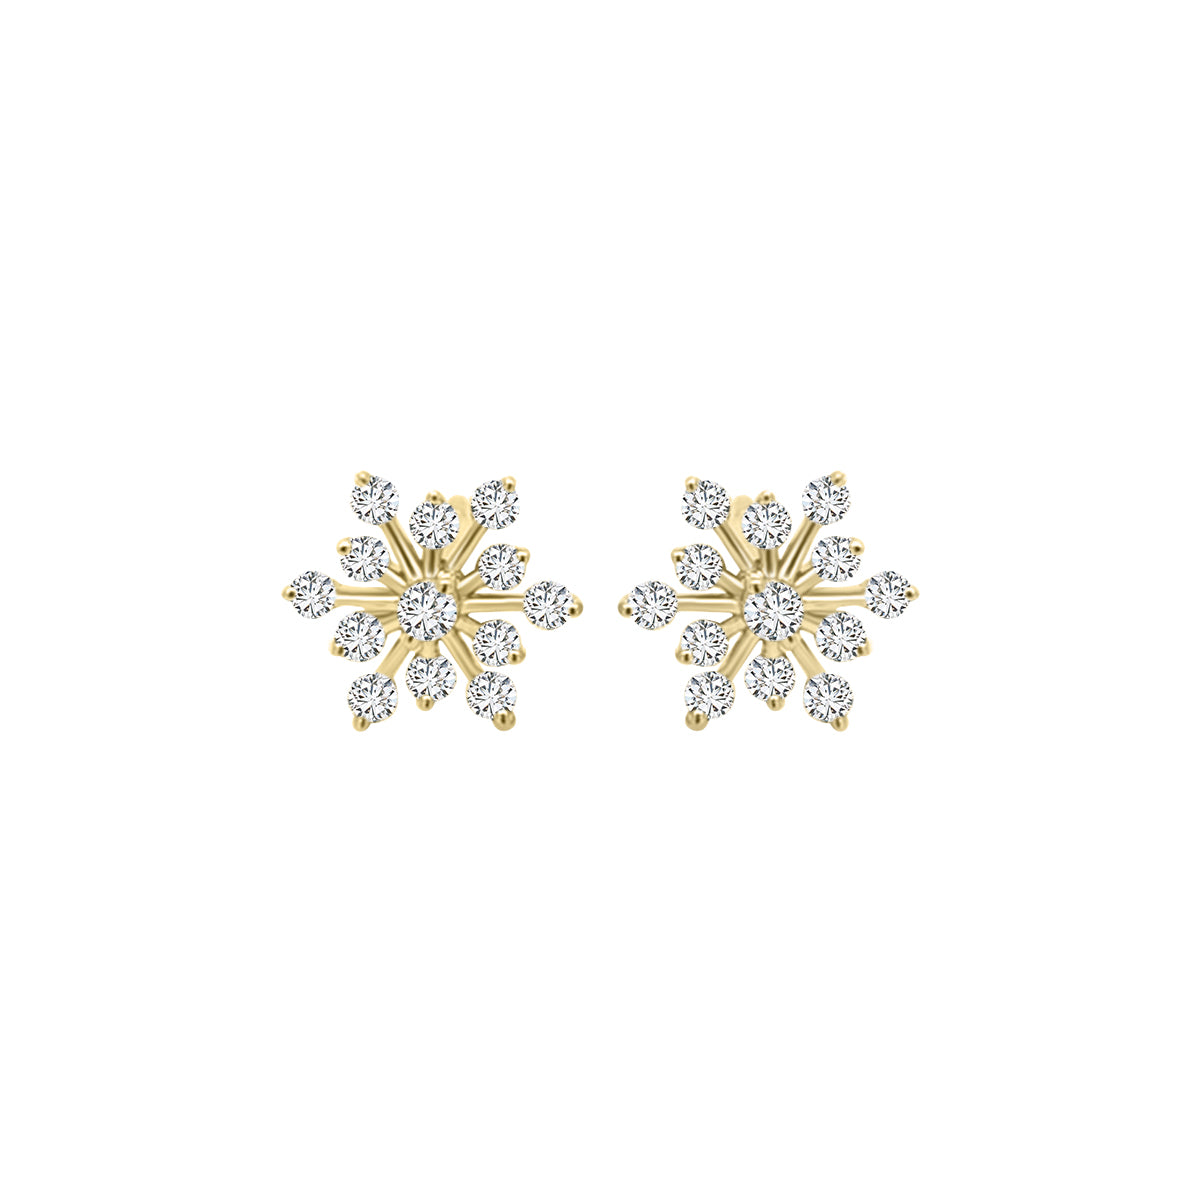 Starburst Diamond Earrings In 18k Yellow Gold.